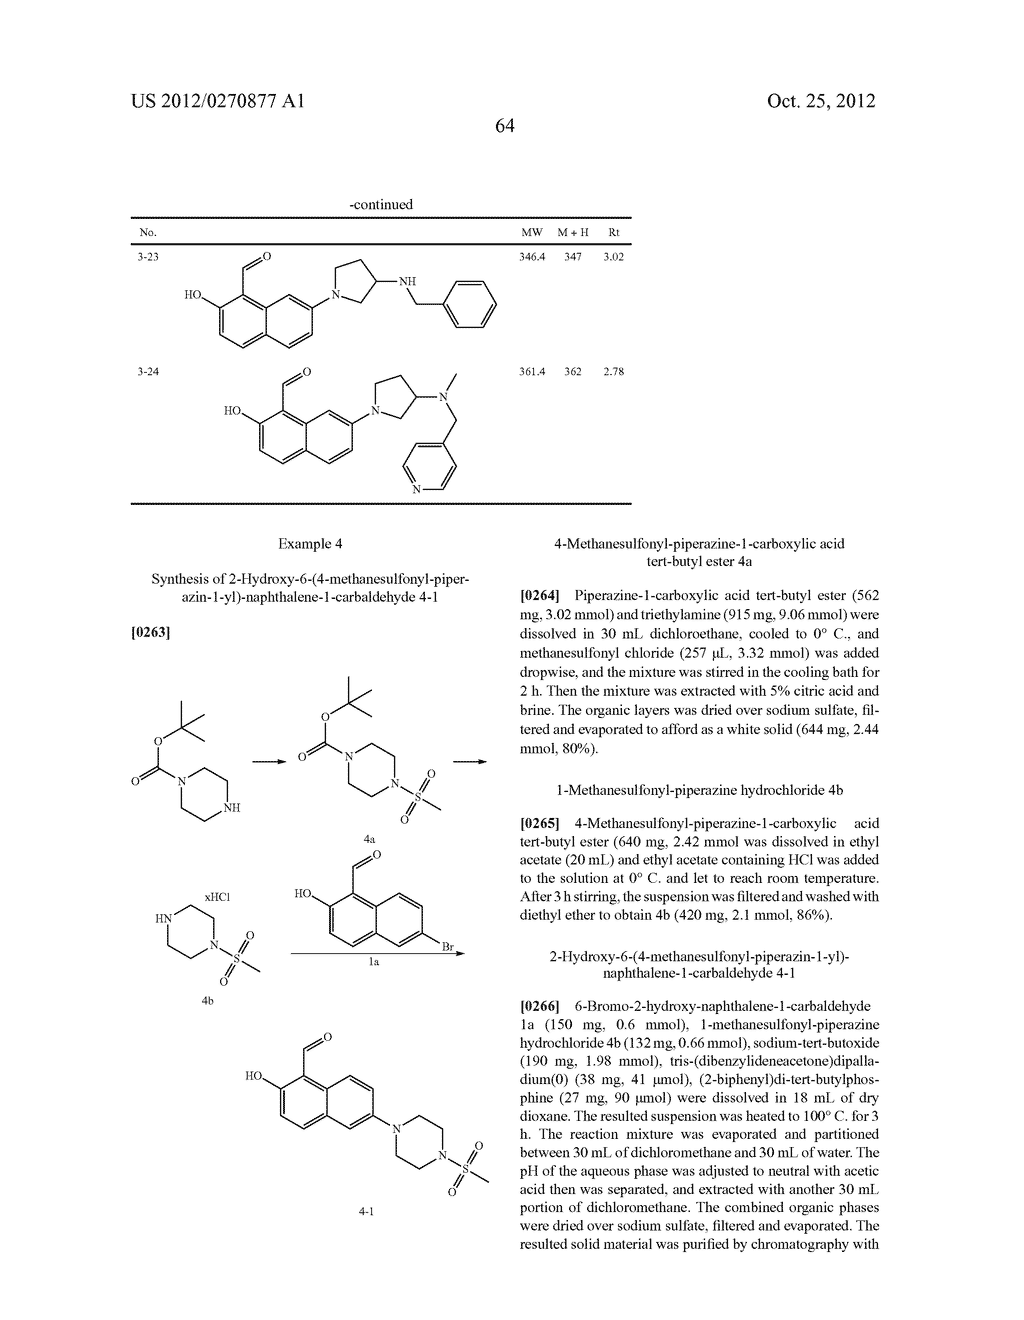 IRE-1alpha INHIBITORS - diagram, schematic, and image 66